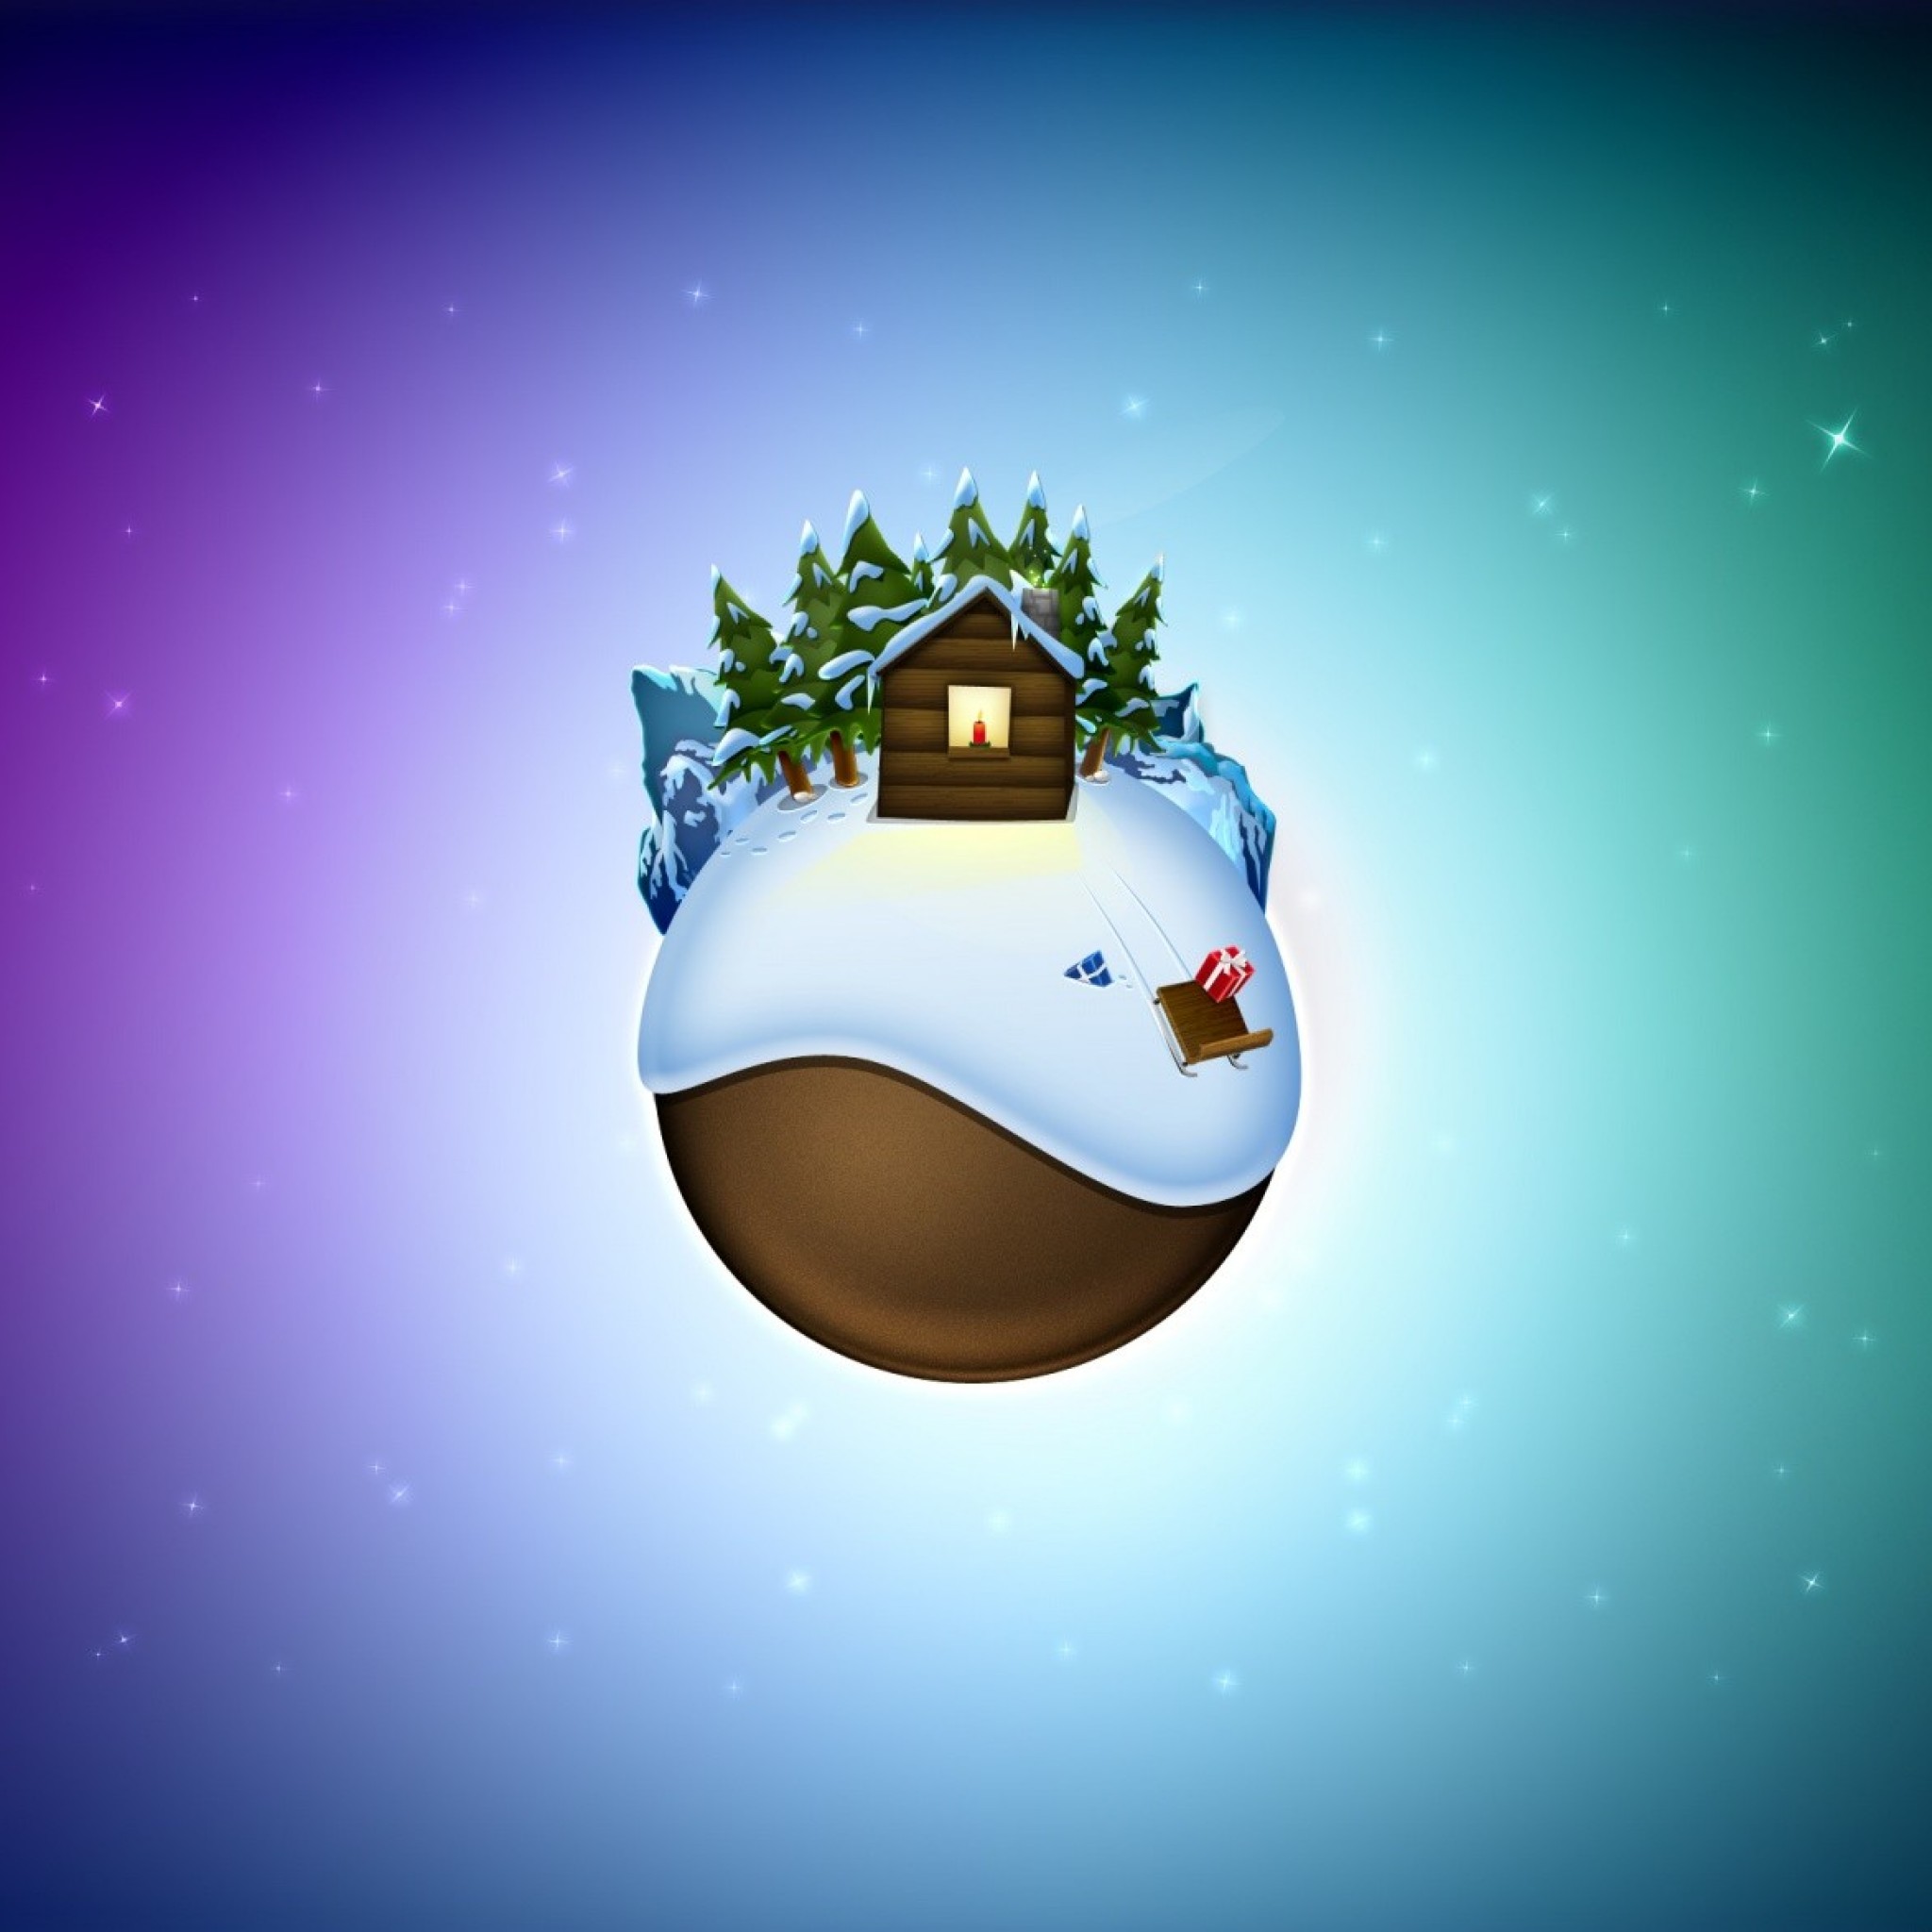 christmas ipad wallpaper,sky,illustration,snowman,tree,graphics